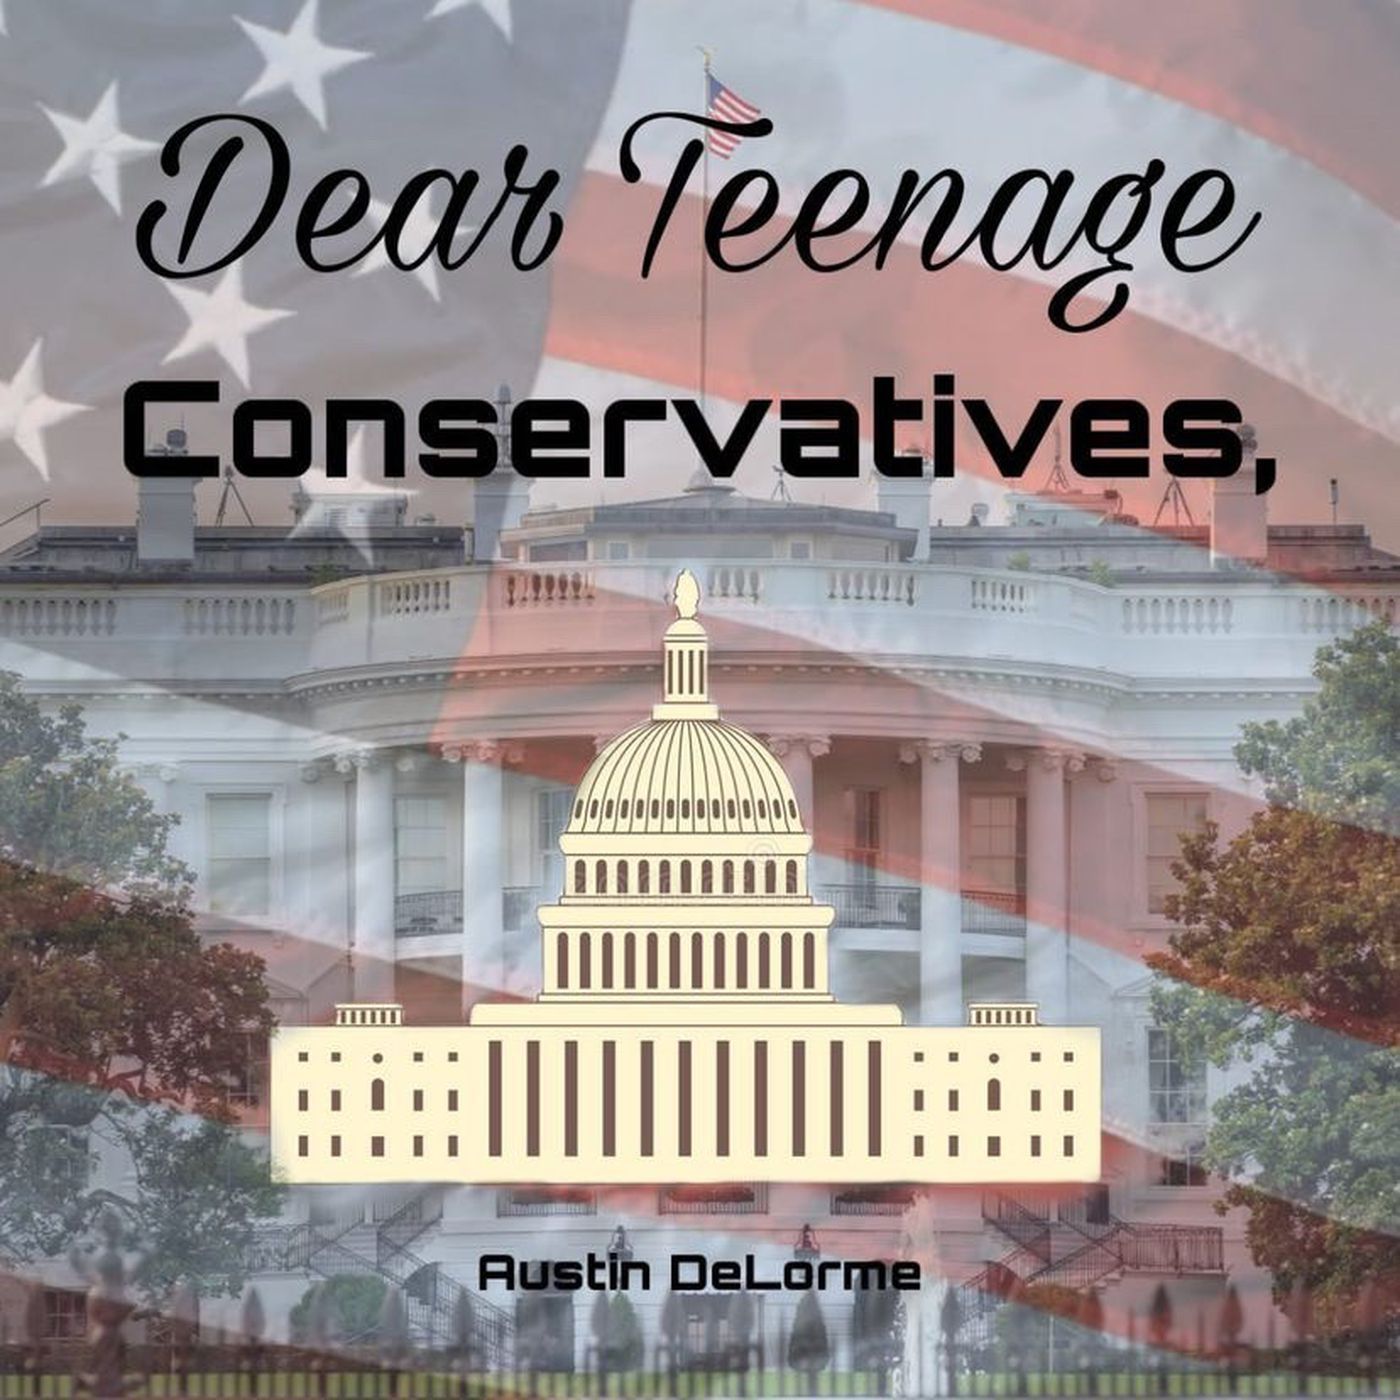 Dear teenage conservatives